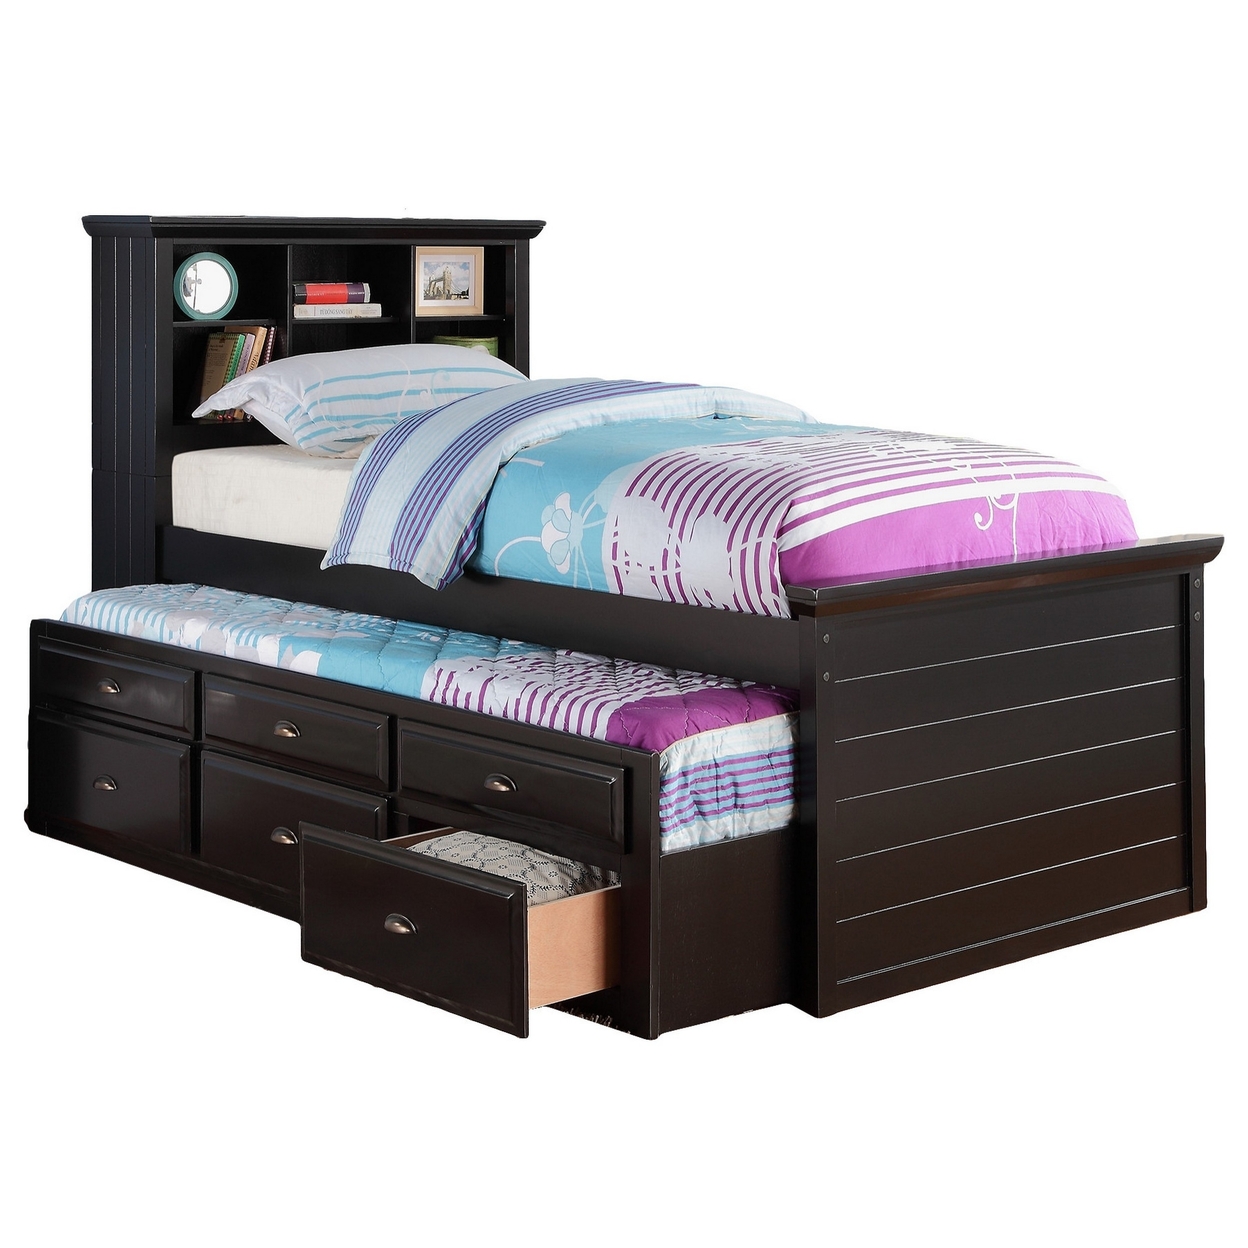 Toni Twin Size Trundle Bed With 6 Drawers, Bookcase Headboard, Black Wood- Saltoro Sherpi